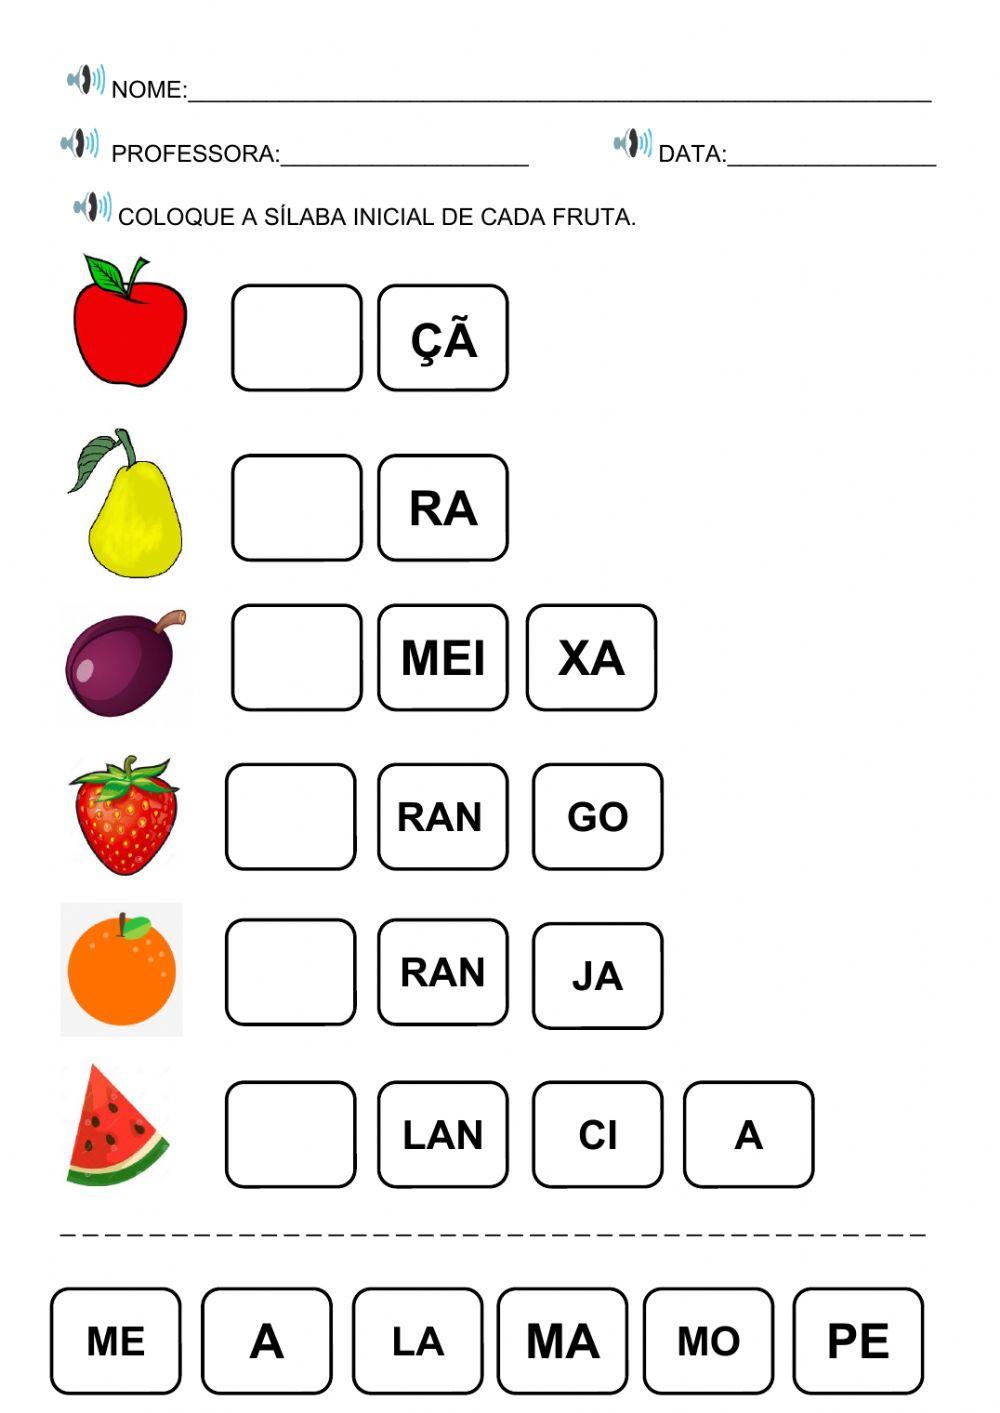 Coloque a sílaba inicial de cada fruta